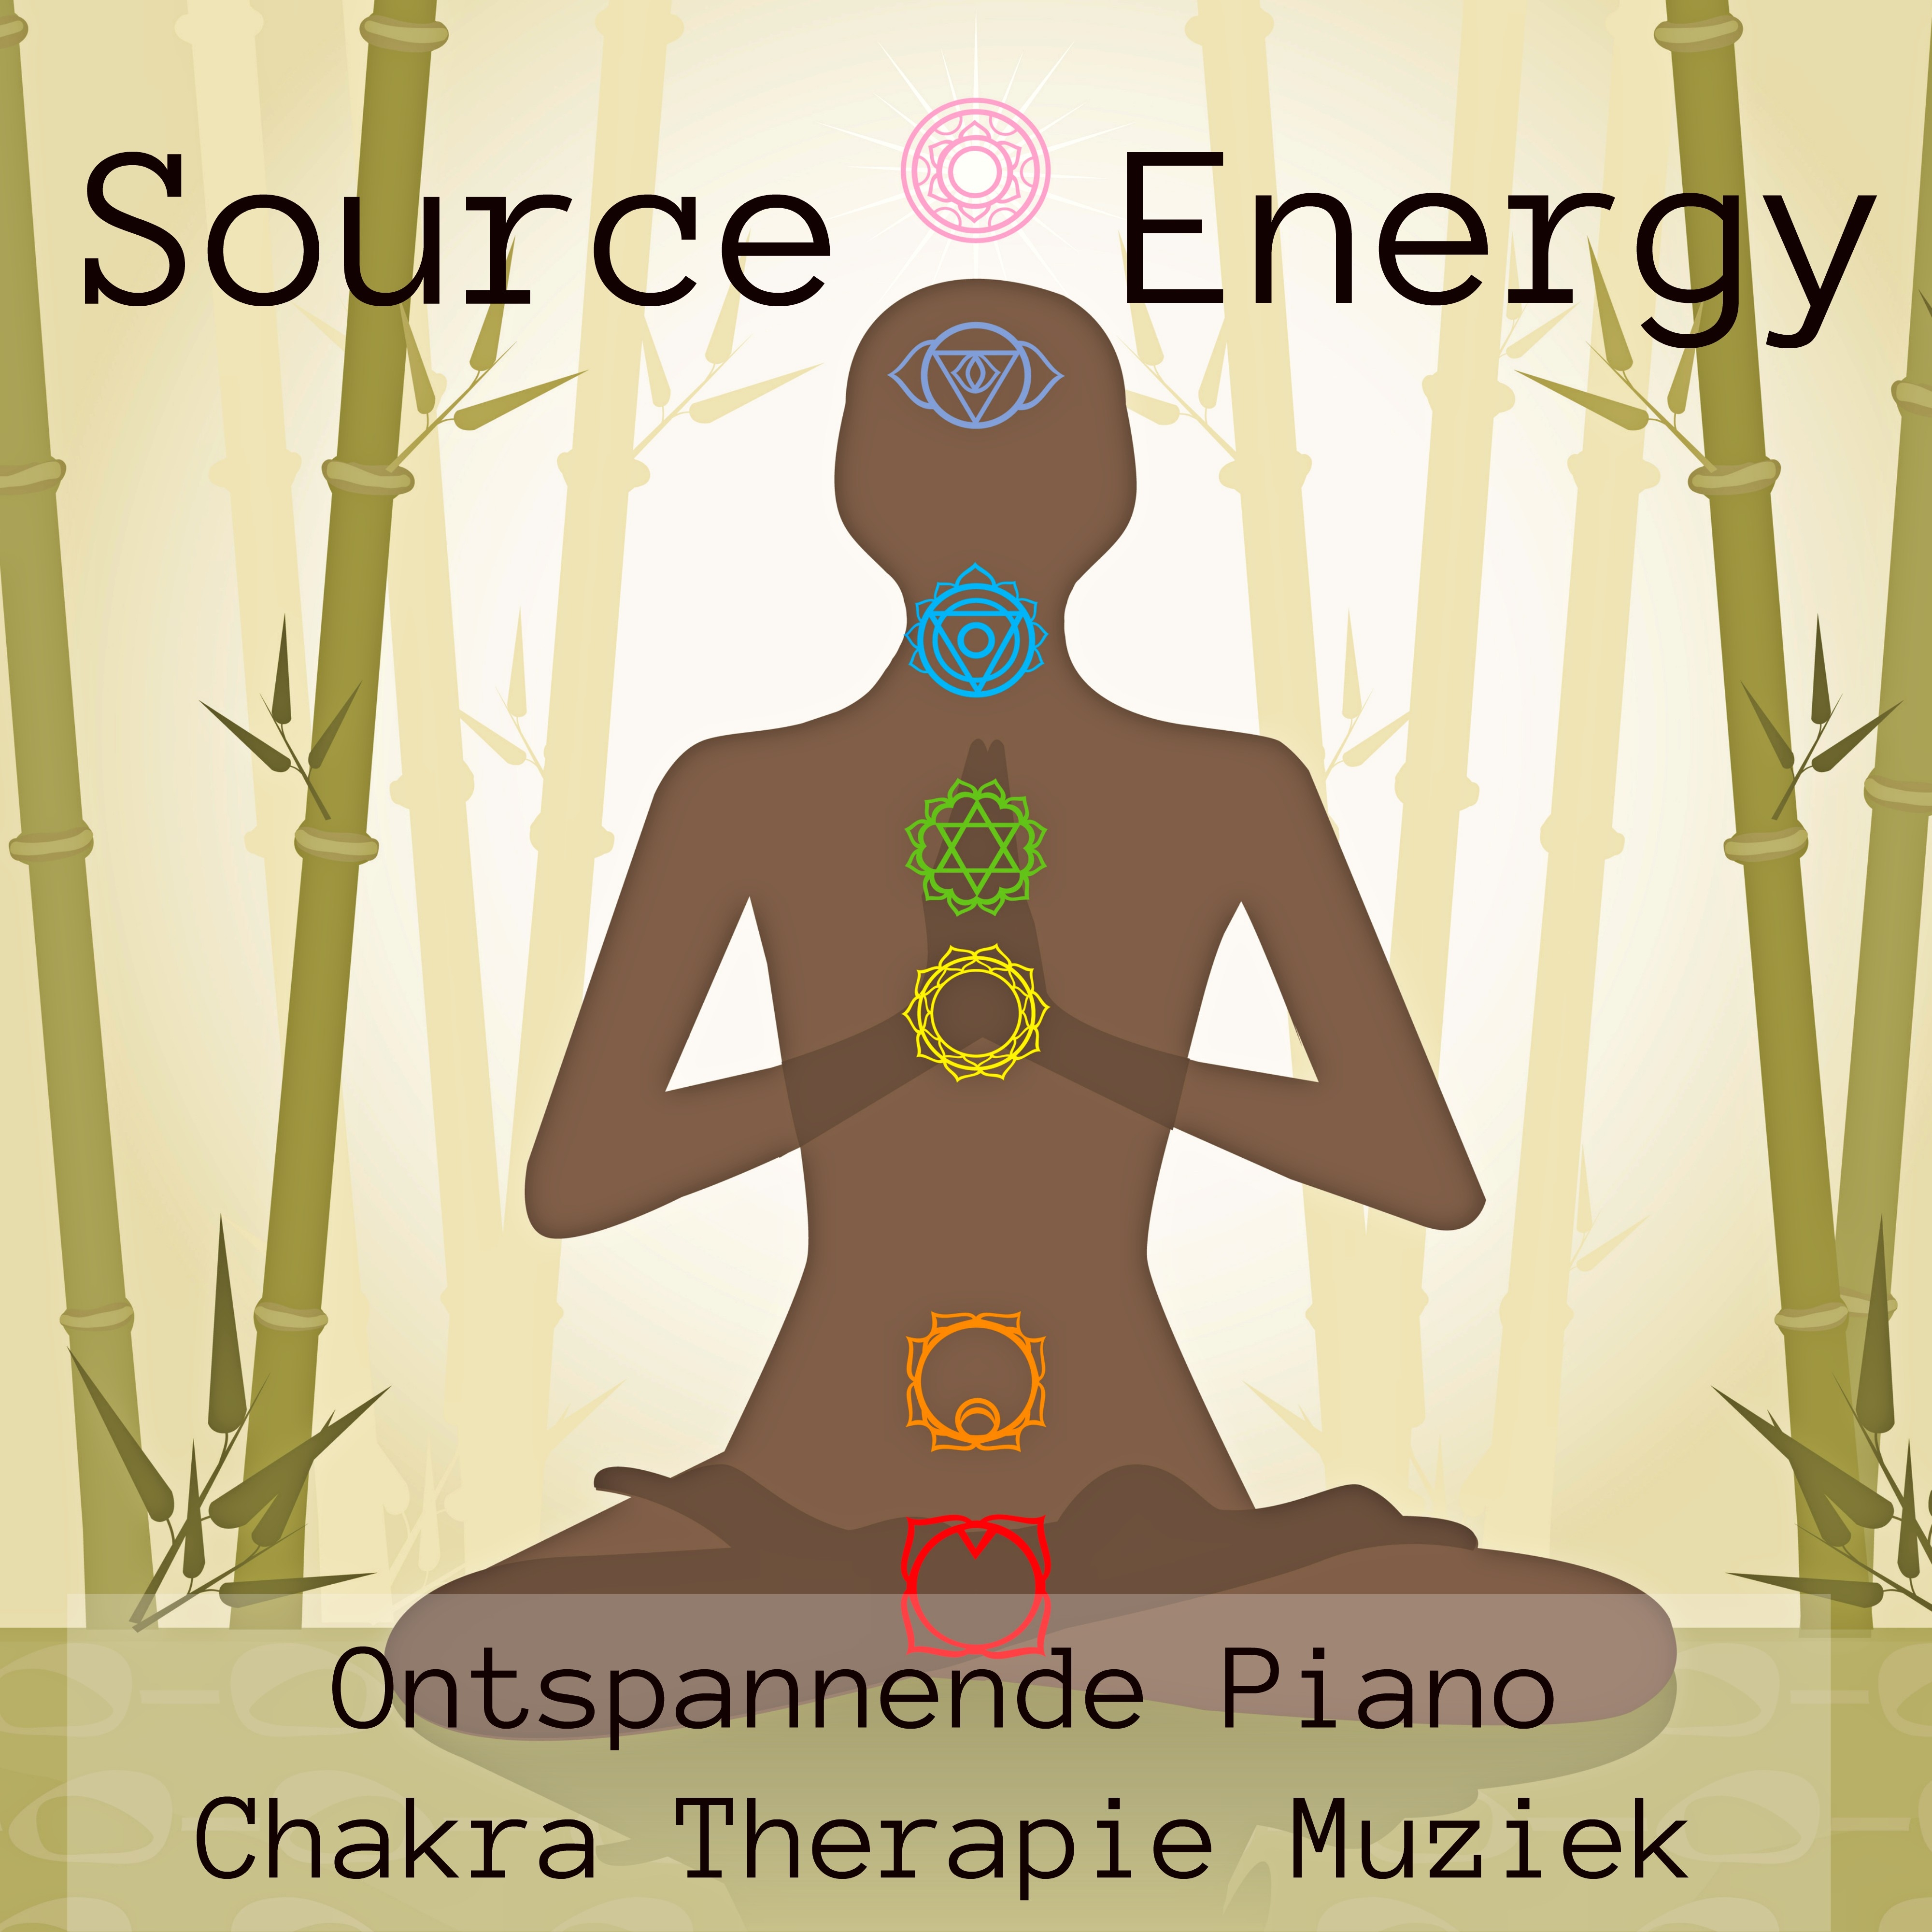 Source Energy - Ontspannende Piano Chakra Therapie Muziek voor Spirituele Genezing Spa Dag Sereniteit Mindfulness Oefeningen